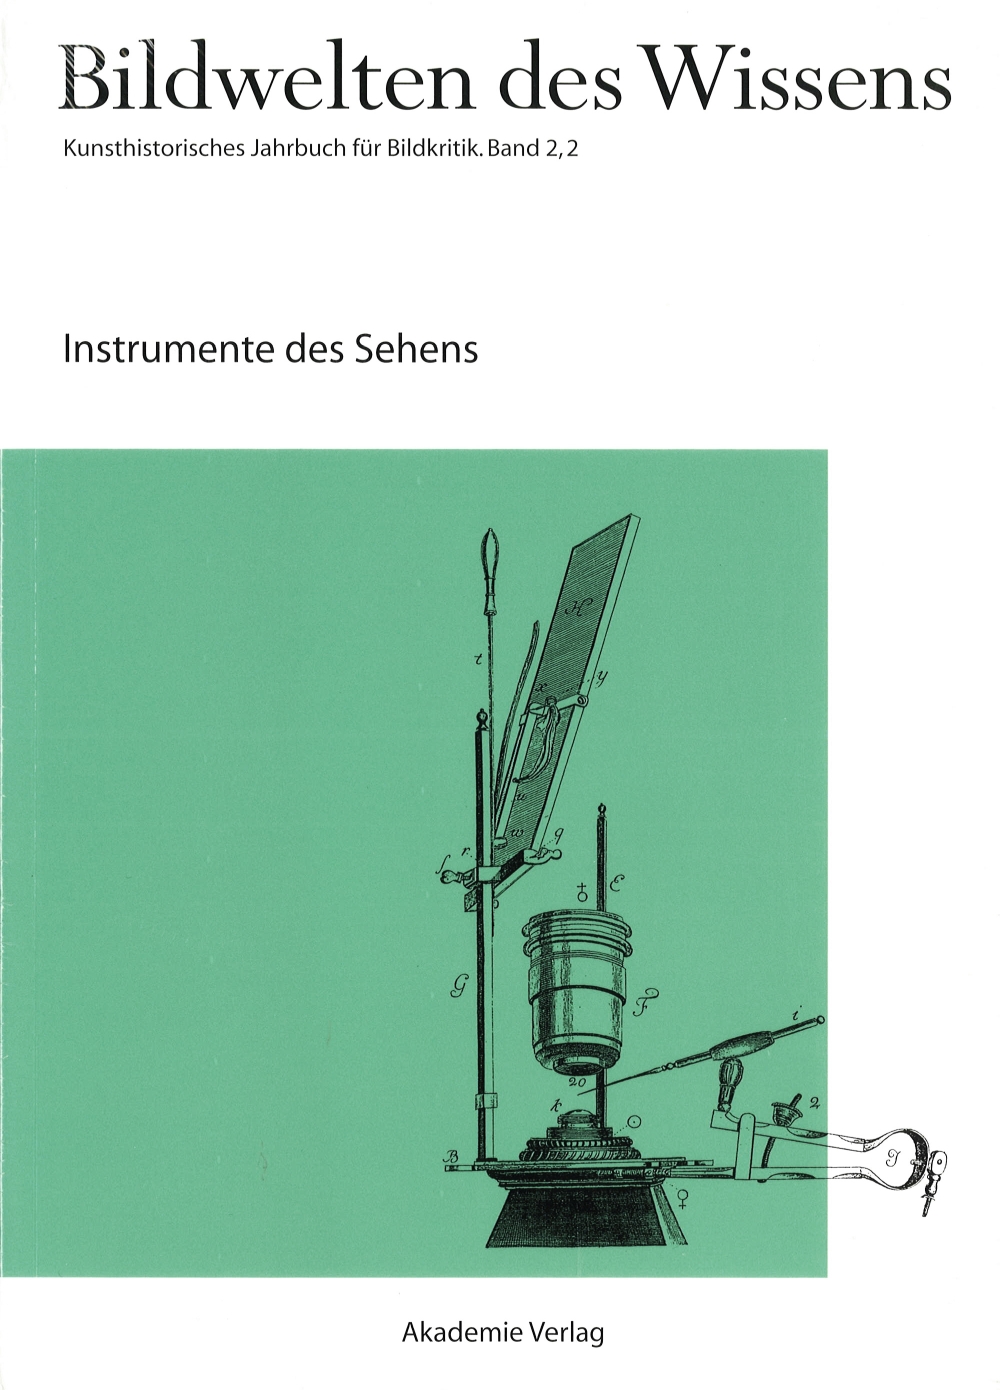 BW 2-2 Instrumente des Sehens_b.jpg